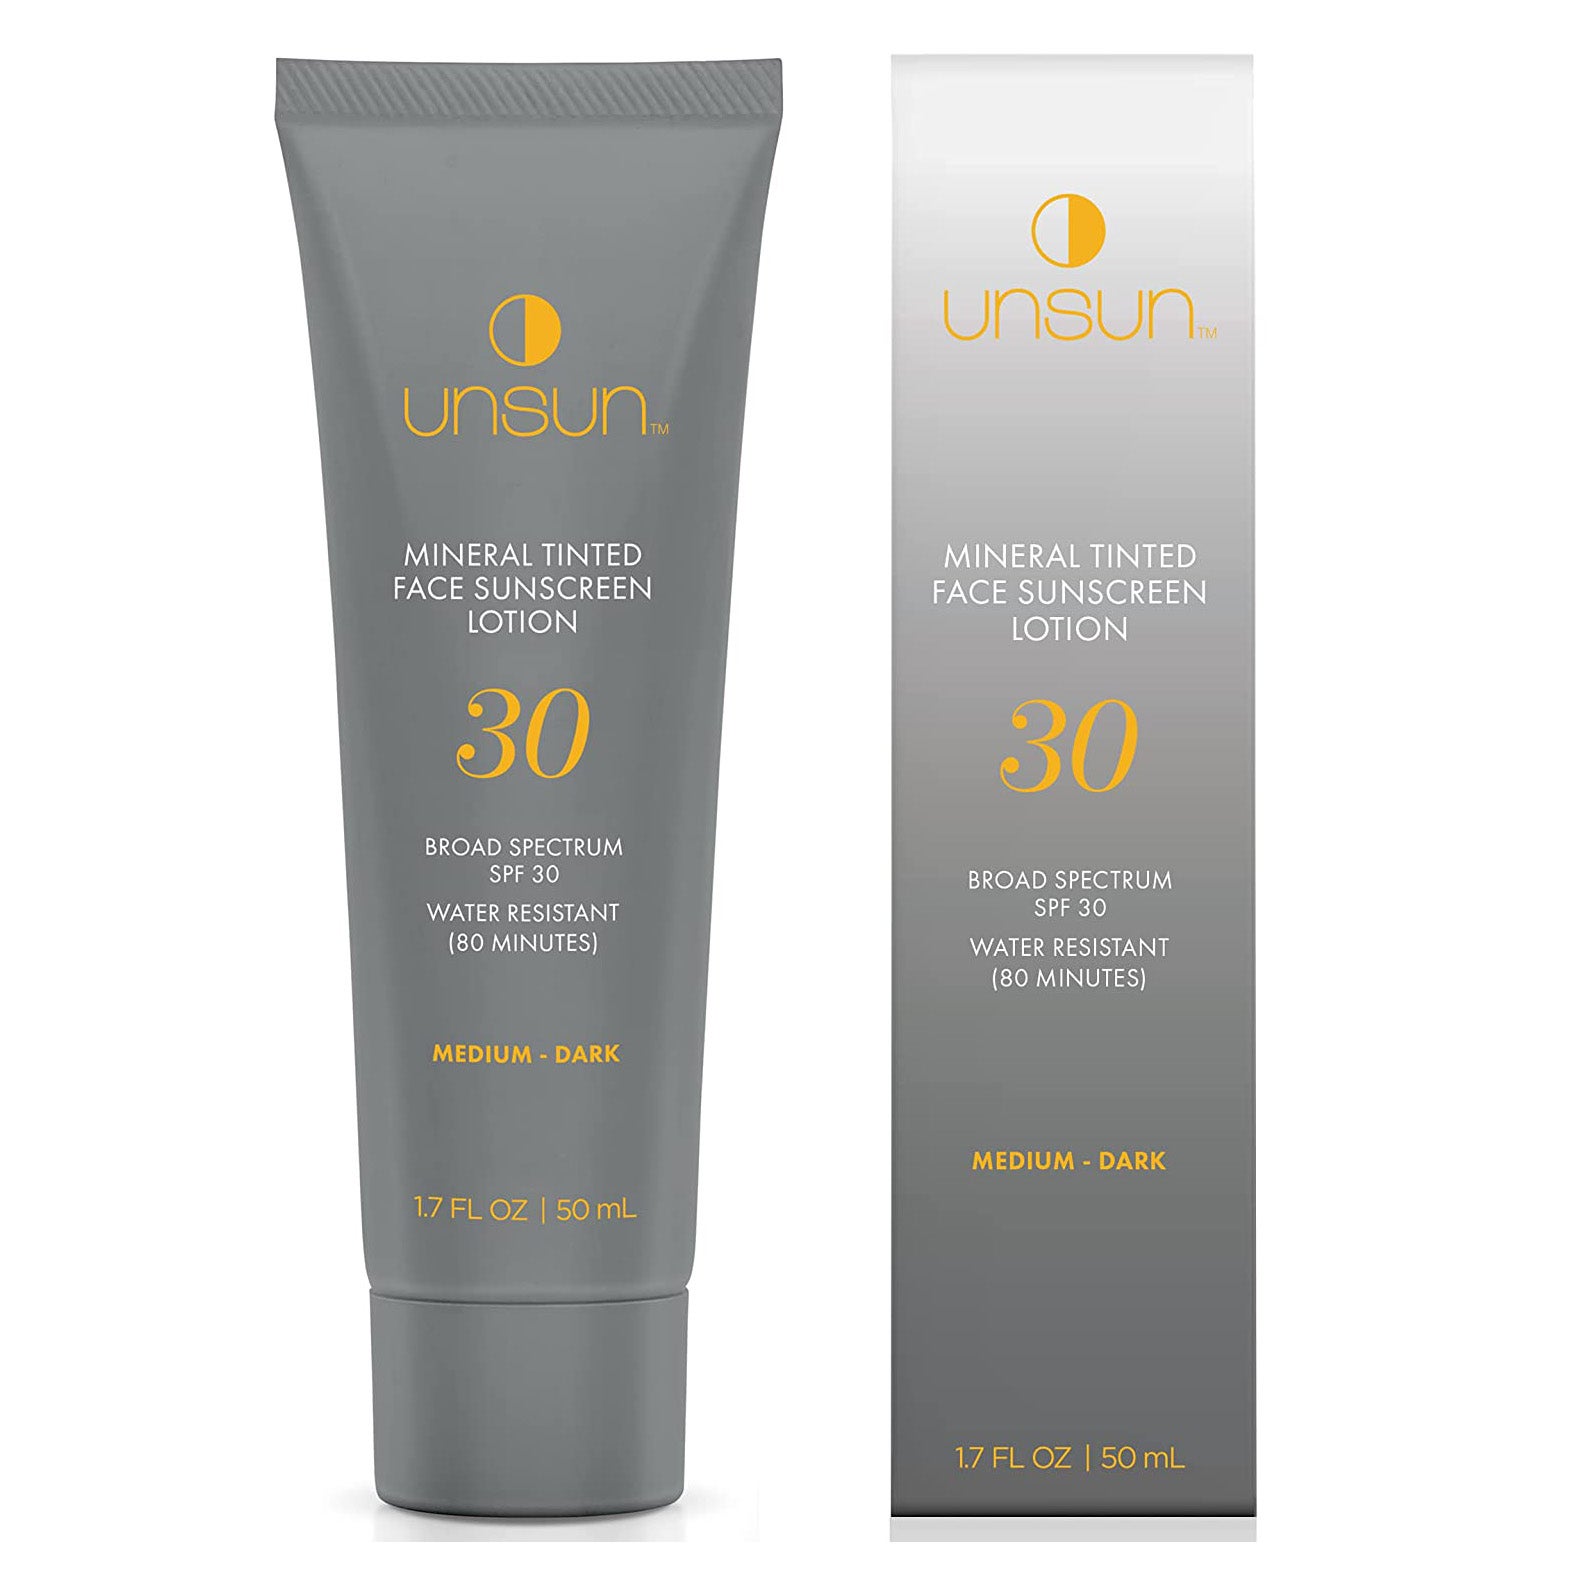 Unsun Mineral Tinted Face Sunscreen with SPF 30 - Medium/Dark